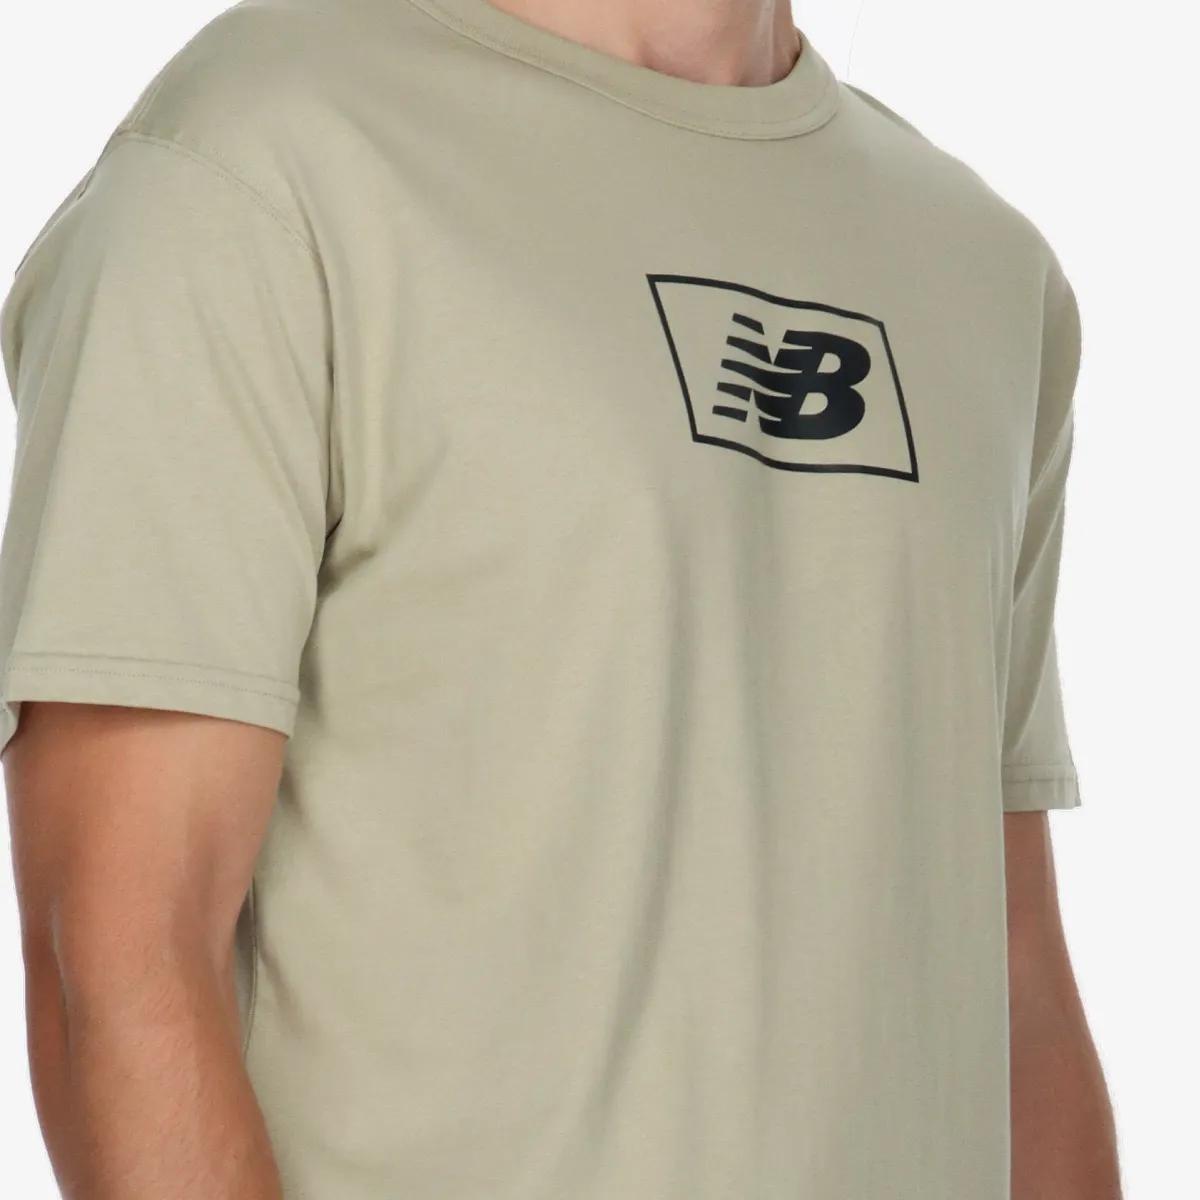 New Balance Tricou Essentials Logo T-Shirt 